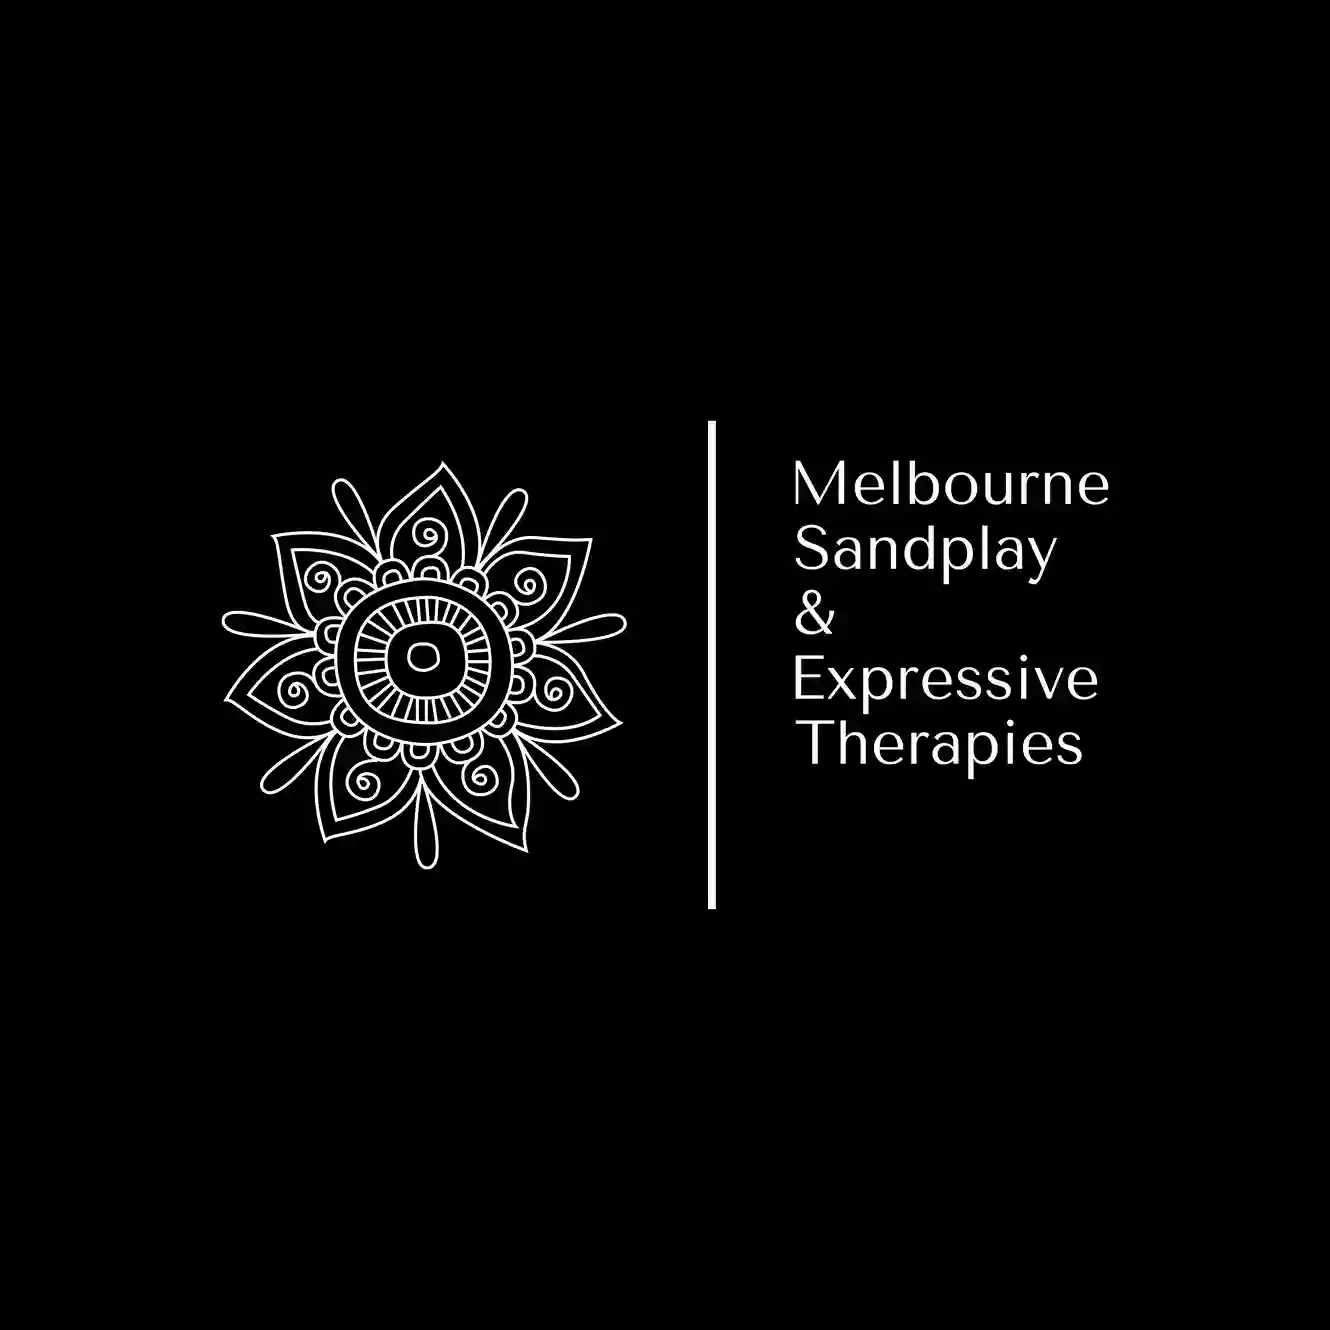 Melbourne Sandplay & Expressive Therapies